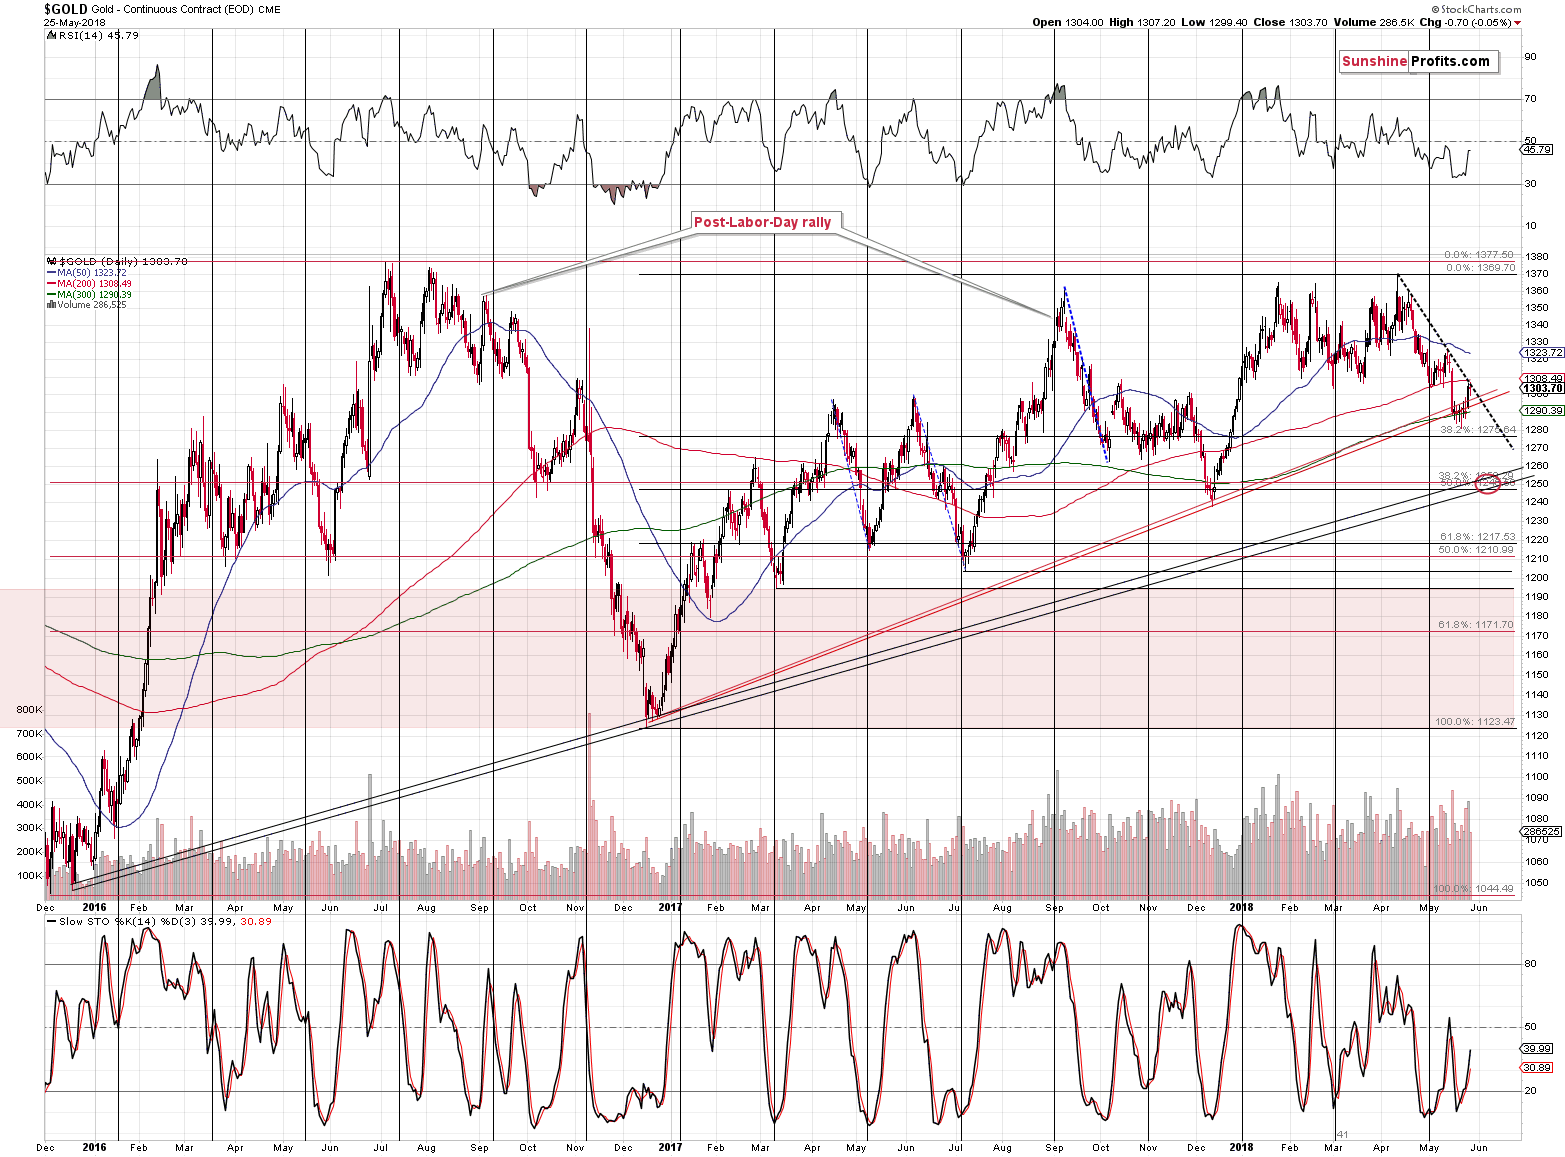 Gold short-term price chart - Gold spot price